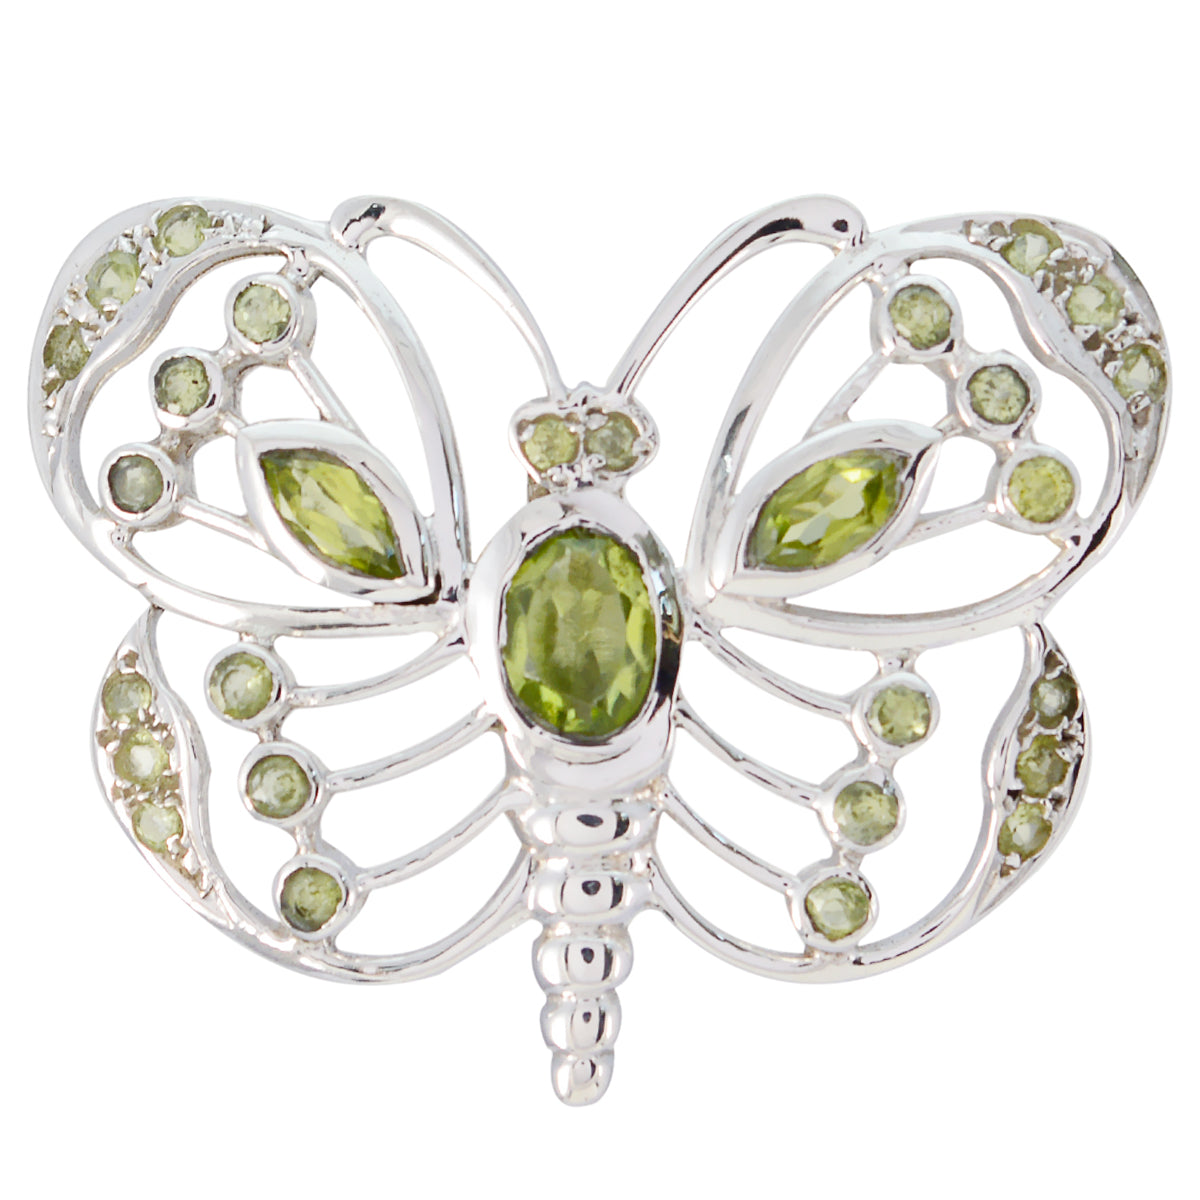 Riyo Good Gemstones Multi Shape Faceted Green Peridot Solid Silver Pendant children day gift